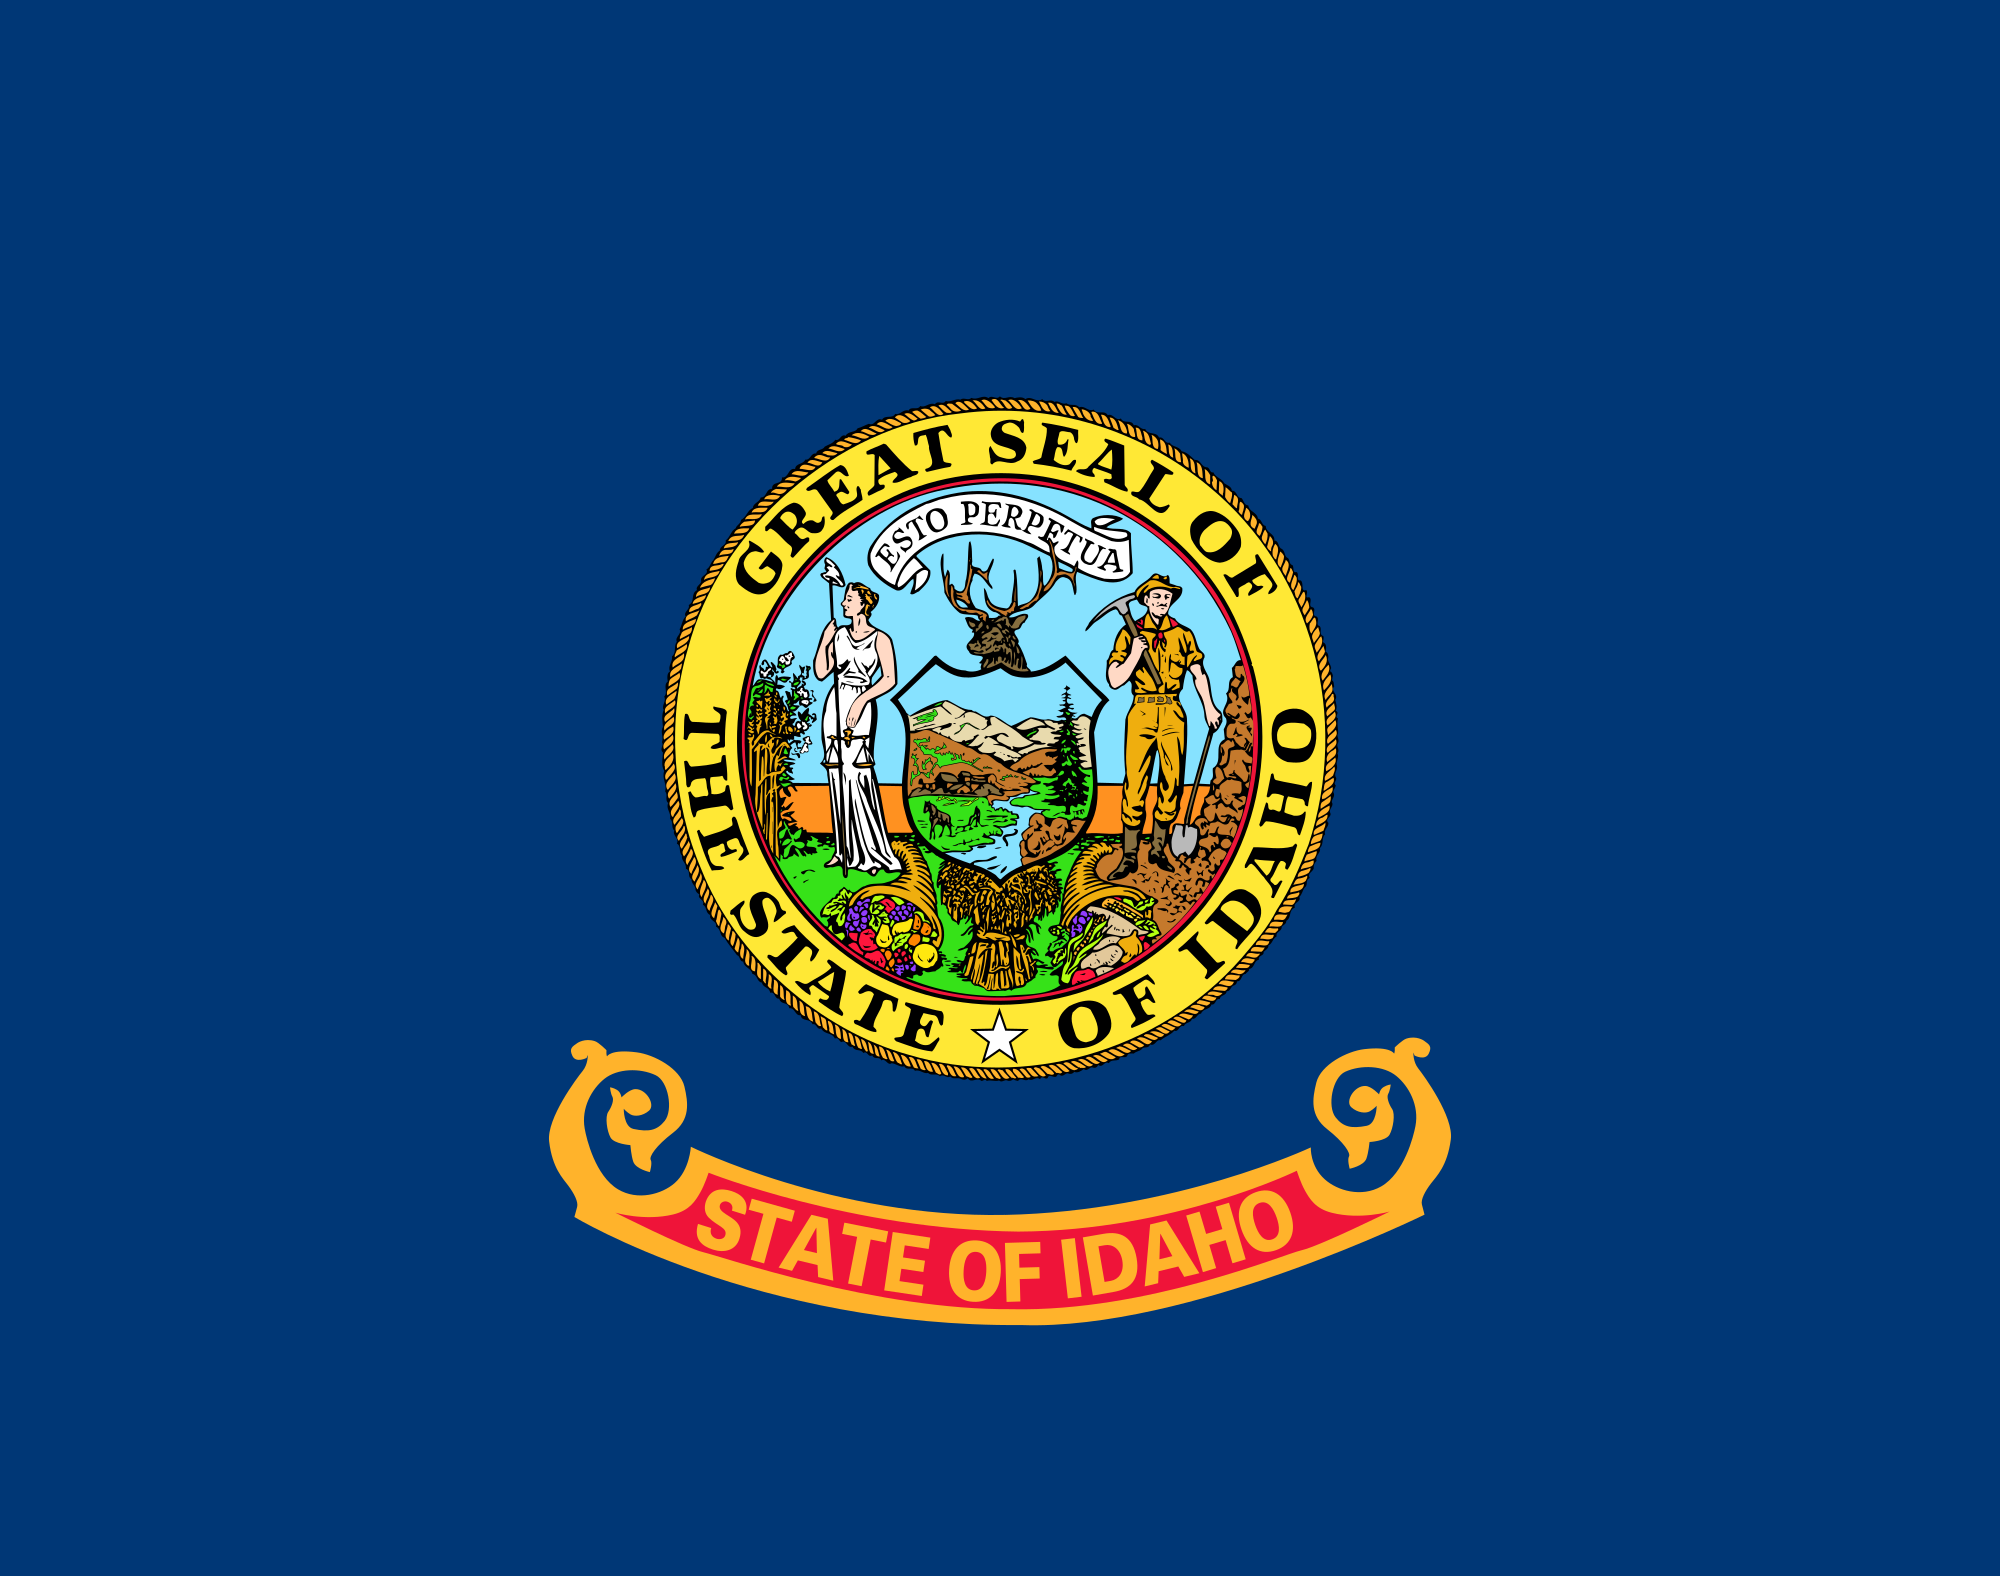 
											State of Idaho